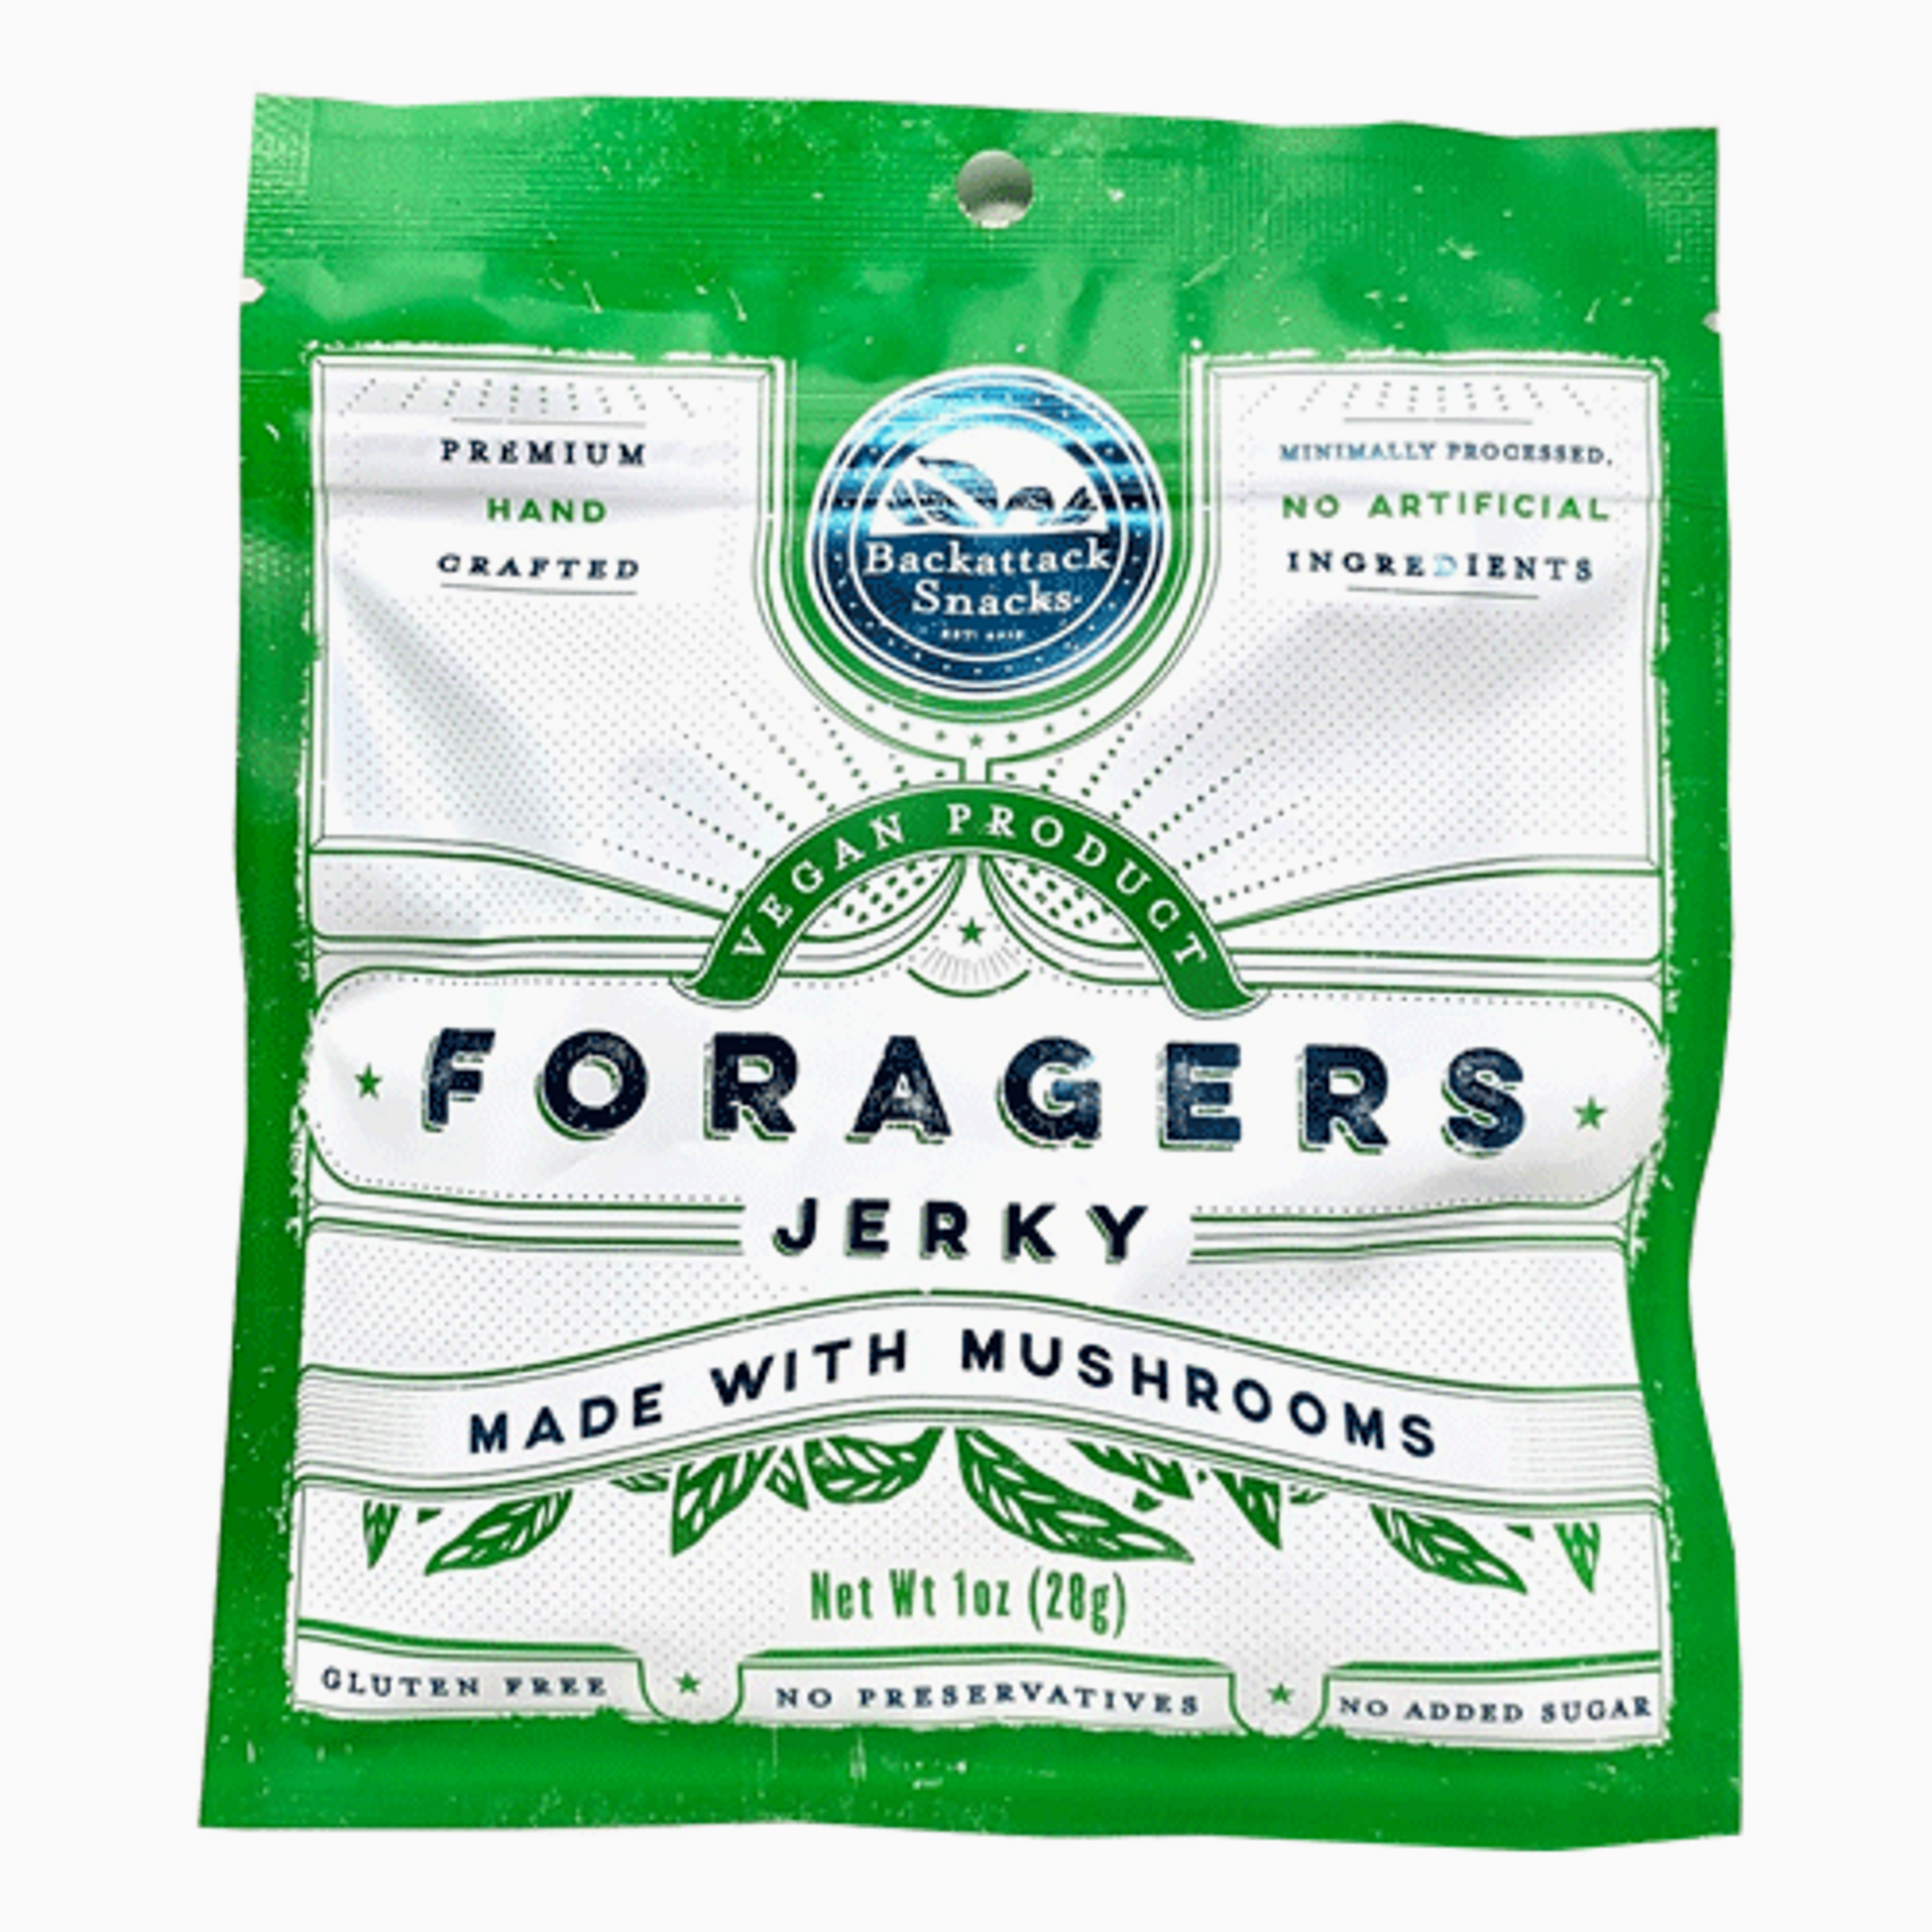 The Forager's Jerky (VEGAN)